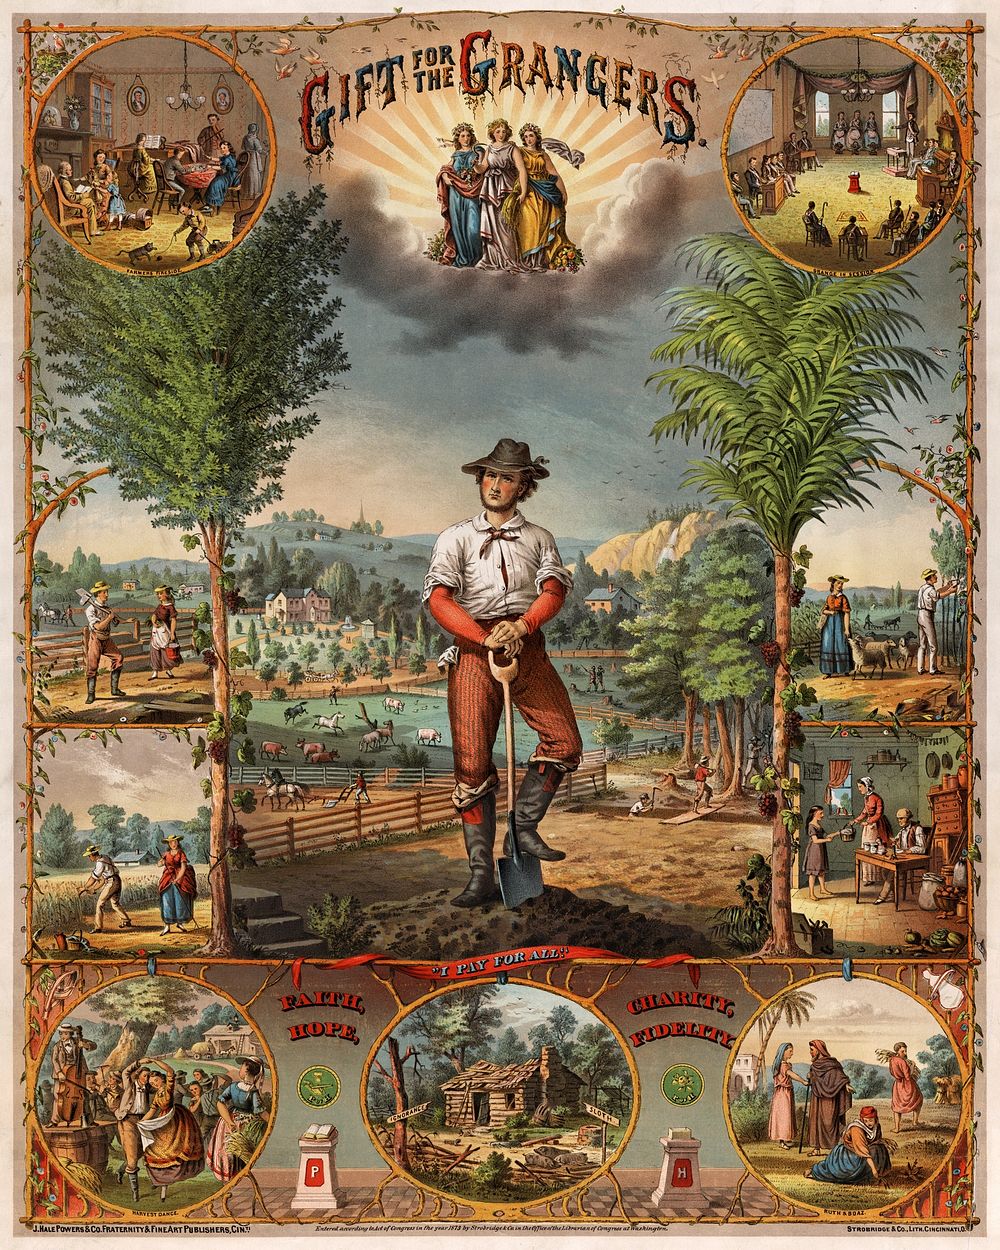 "Gift for the Grangers", 1873 print promoting U.S. farmers' organization. The upper left inset shows "Farmer's fireside"…